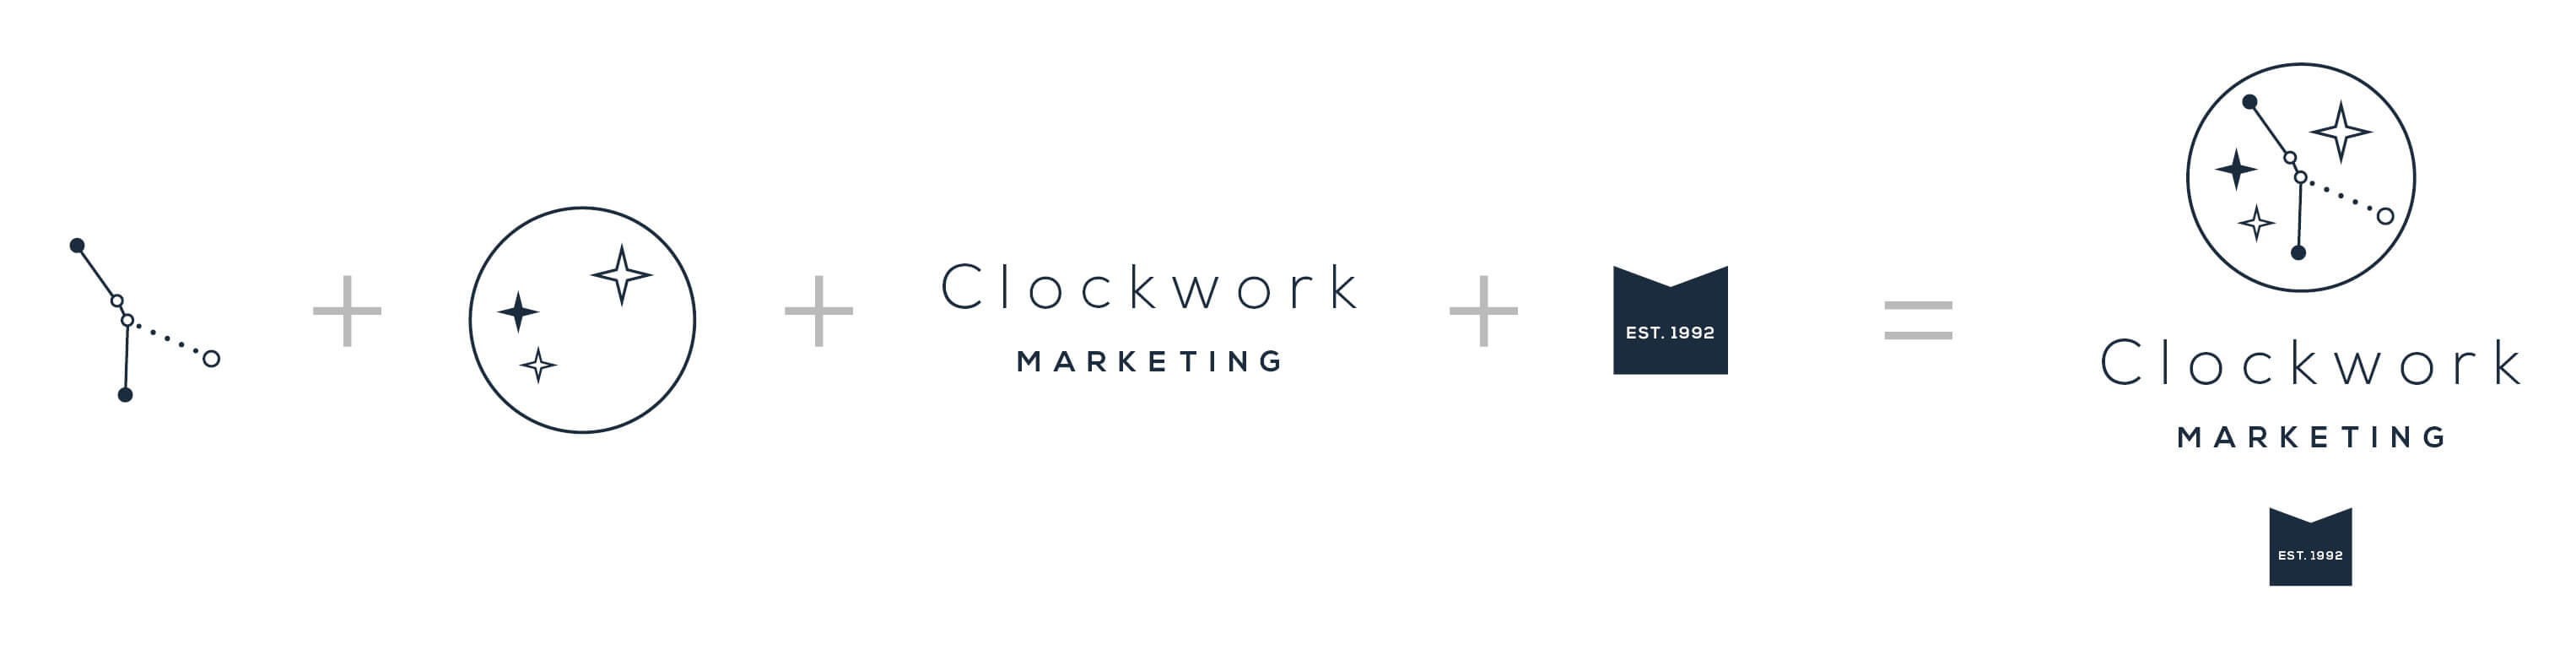 Clockwork logo meaning